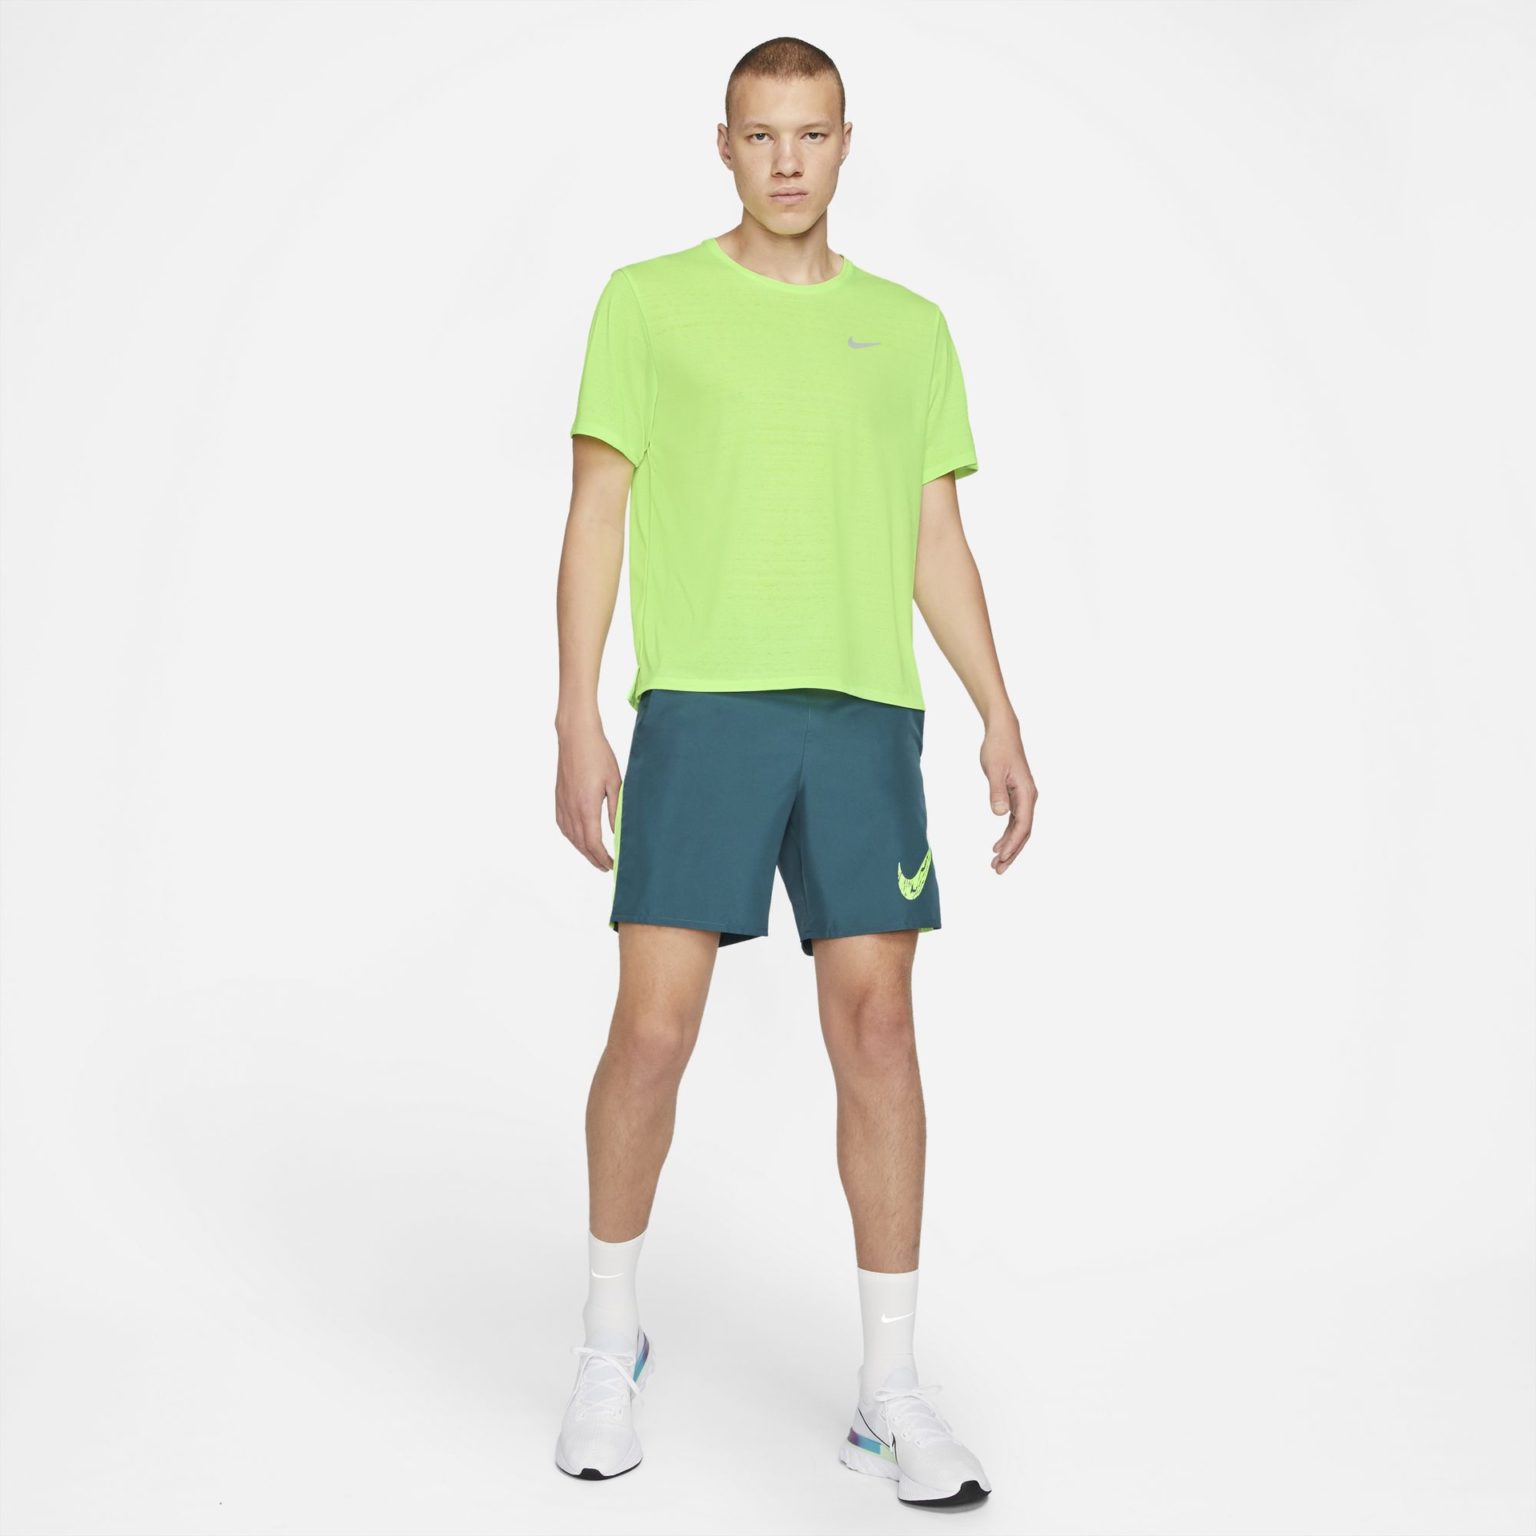 Nike Men's Miler Top - Ghost Green/Reflective Silver - Running Bath